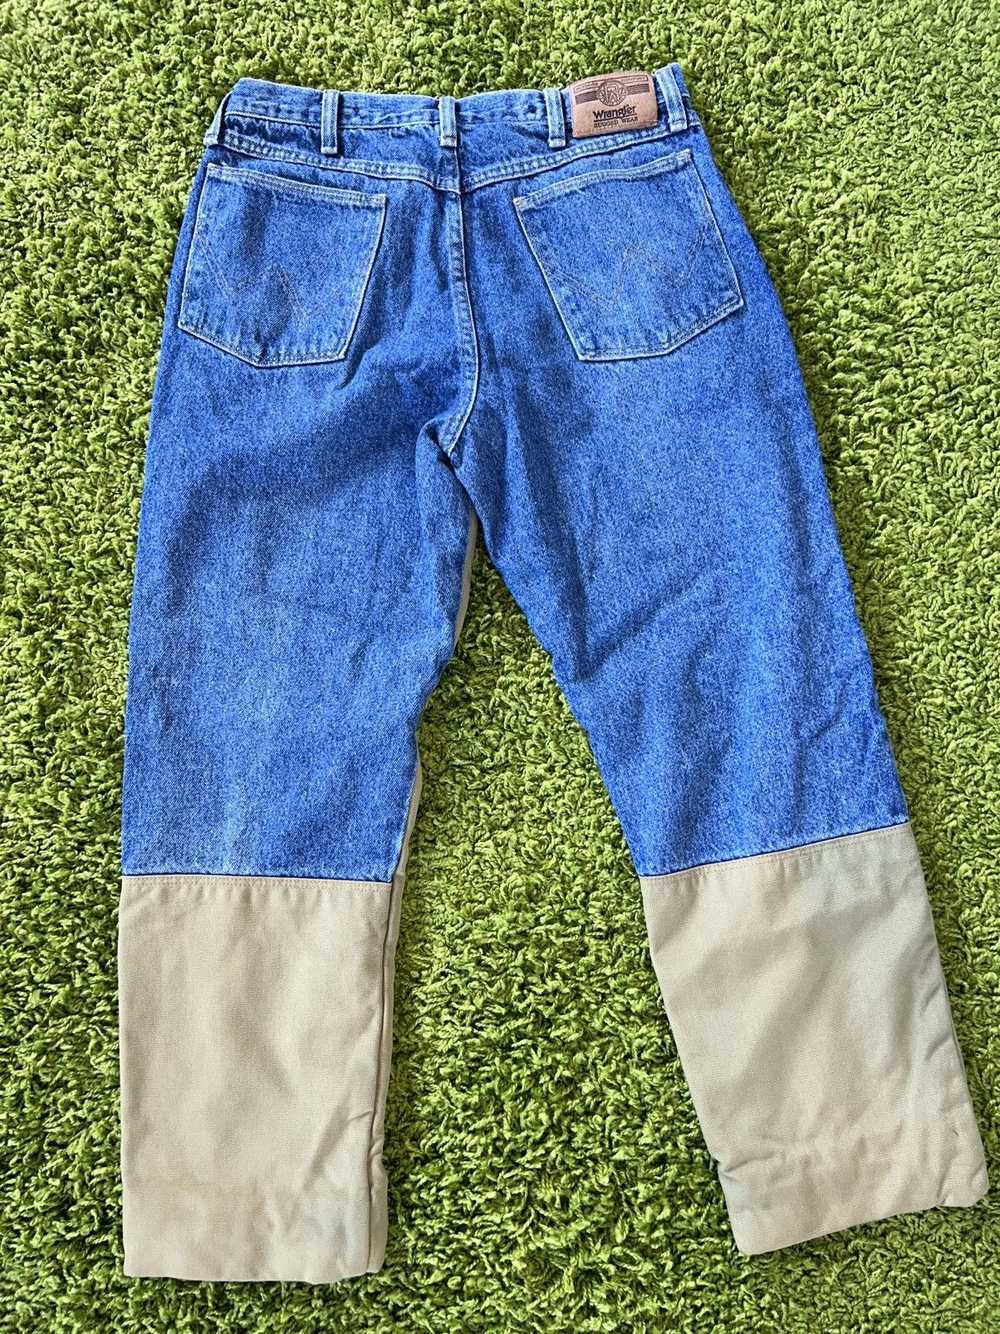 Wrangler Vintage Wrangler jeans - image 2